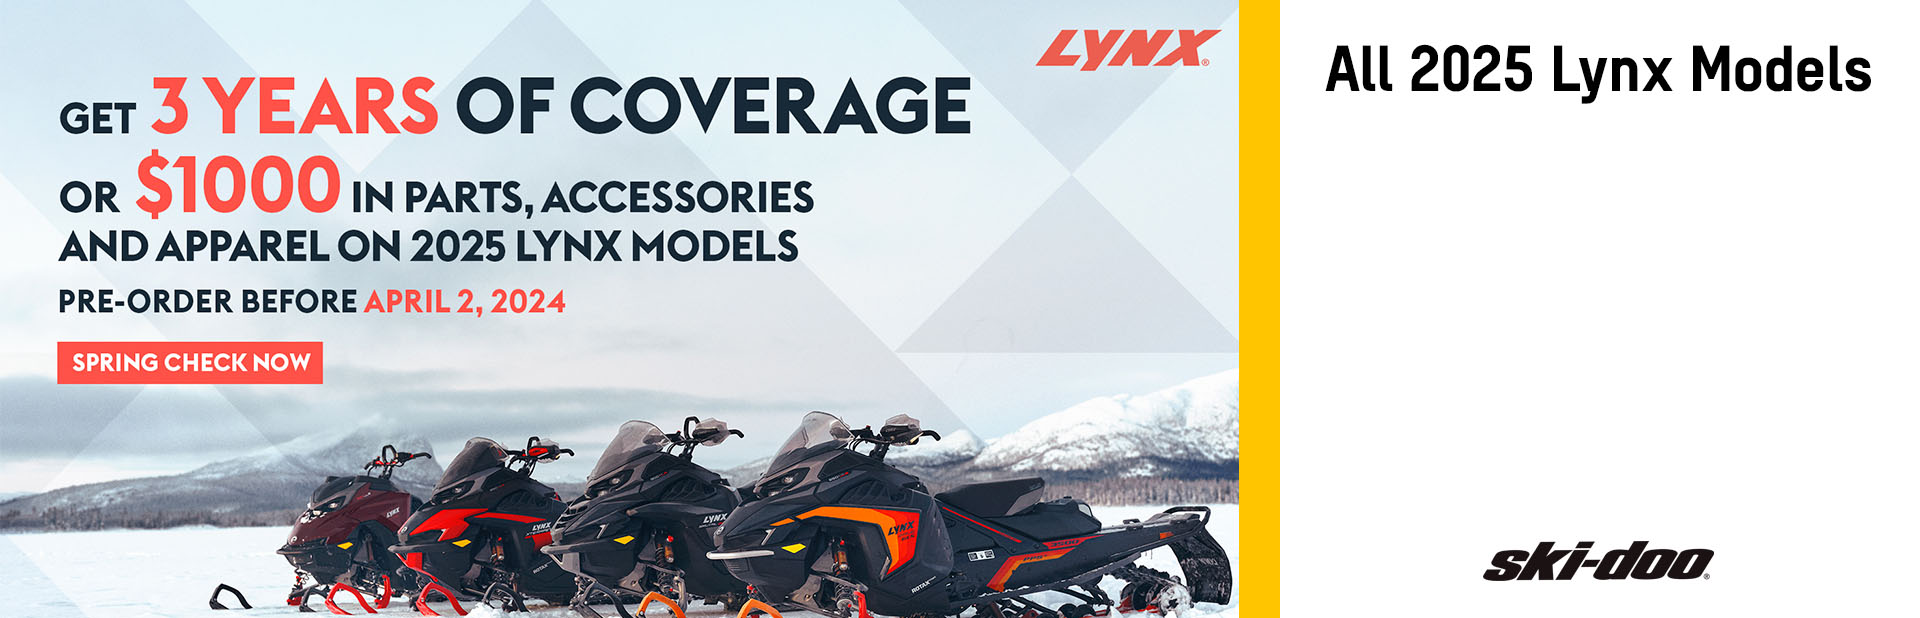 All 2025 Lynx Models